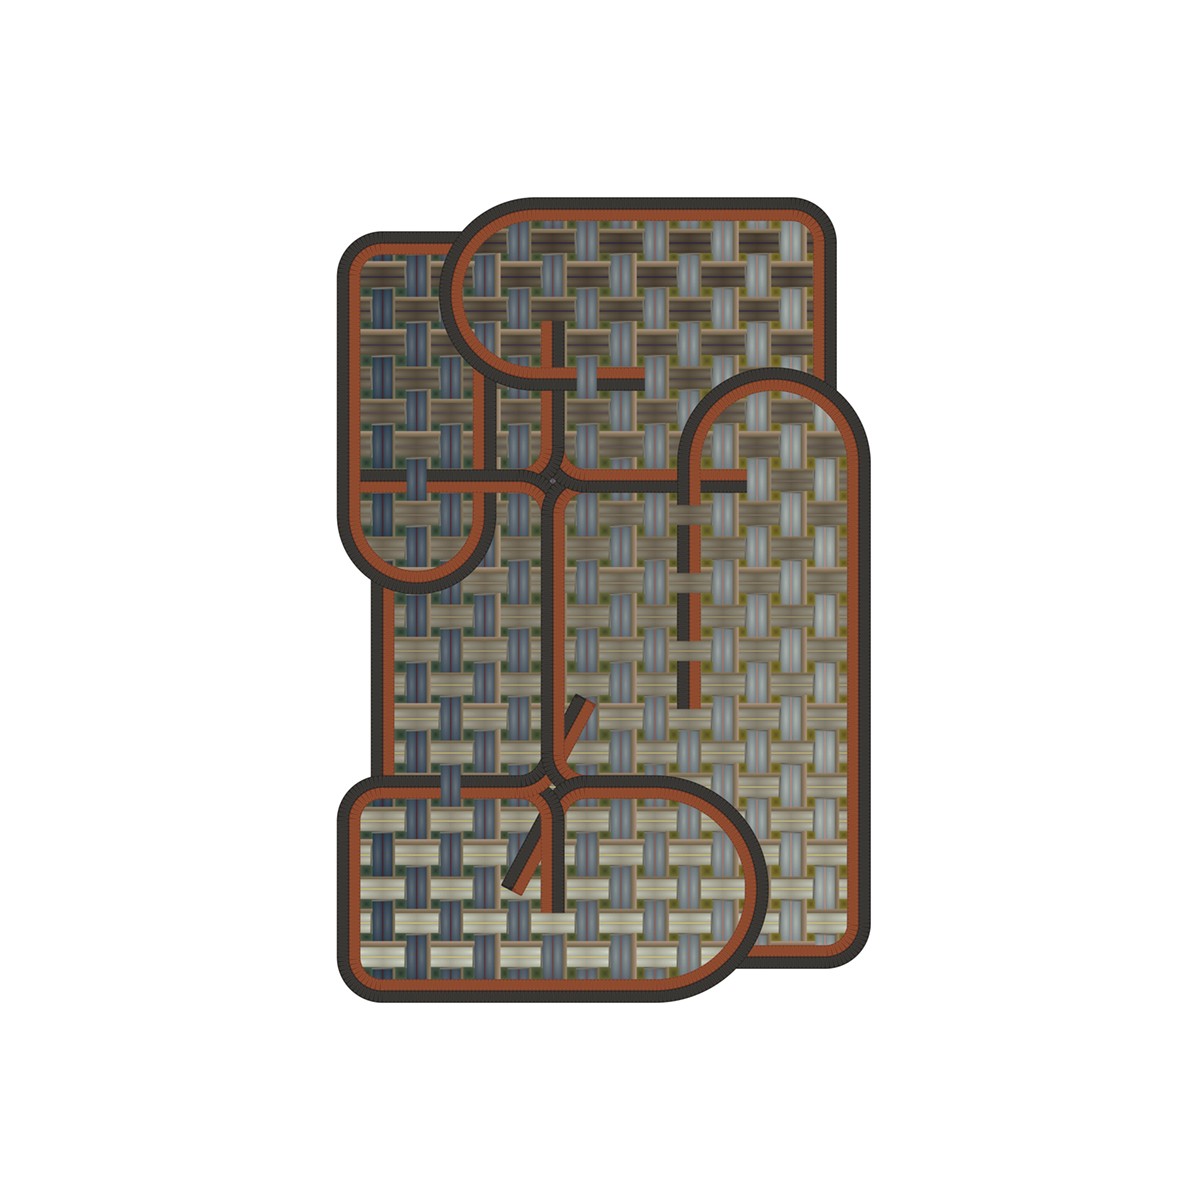 Tangle Menjangan rug - 194 x 280 cm - Yarn Box